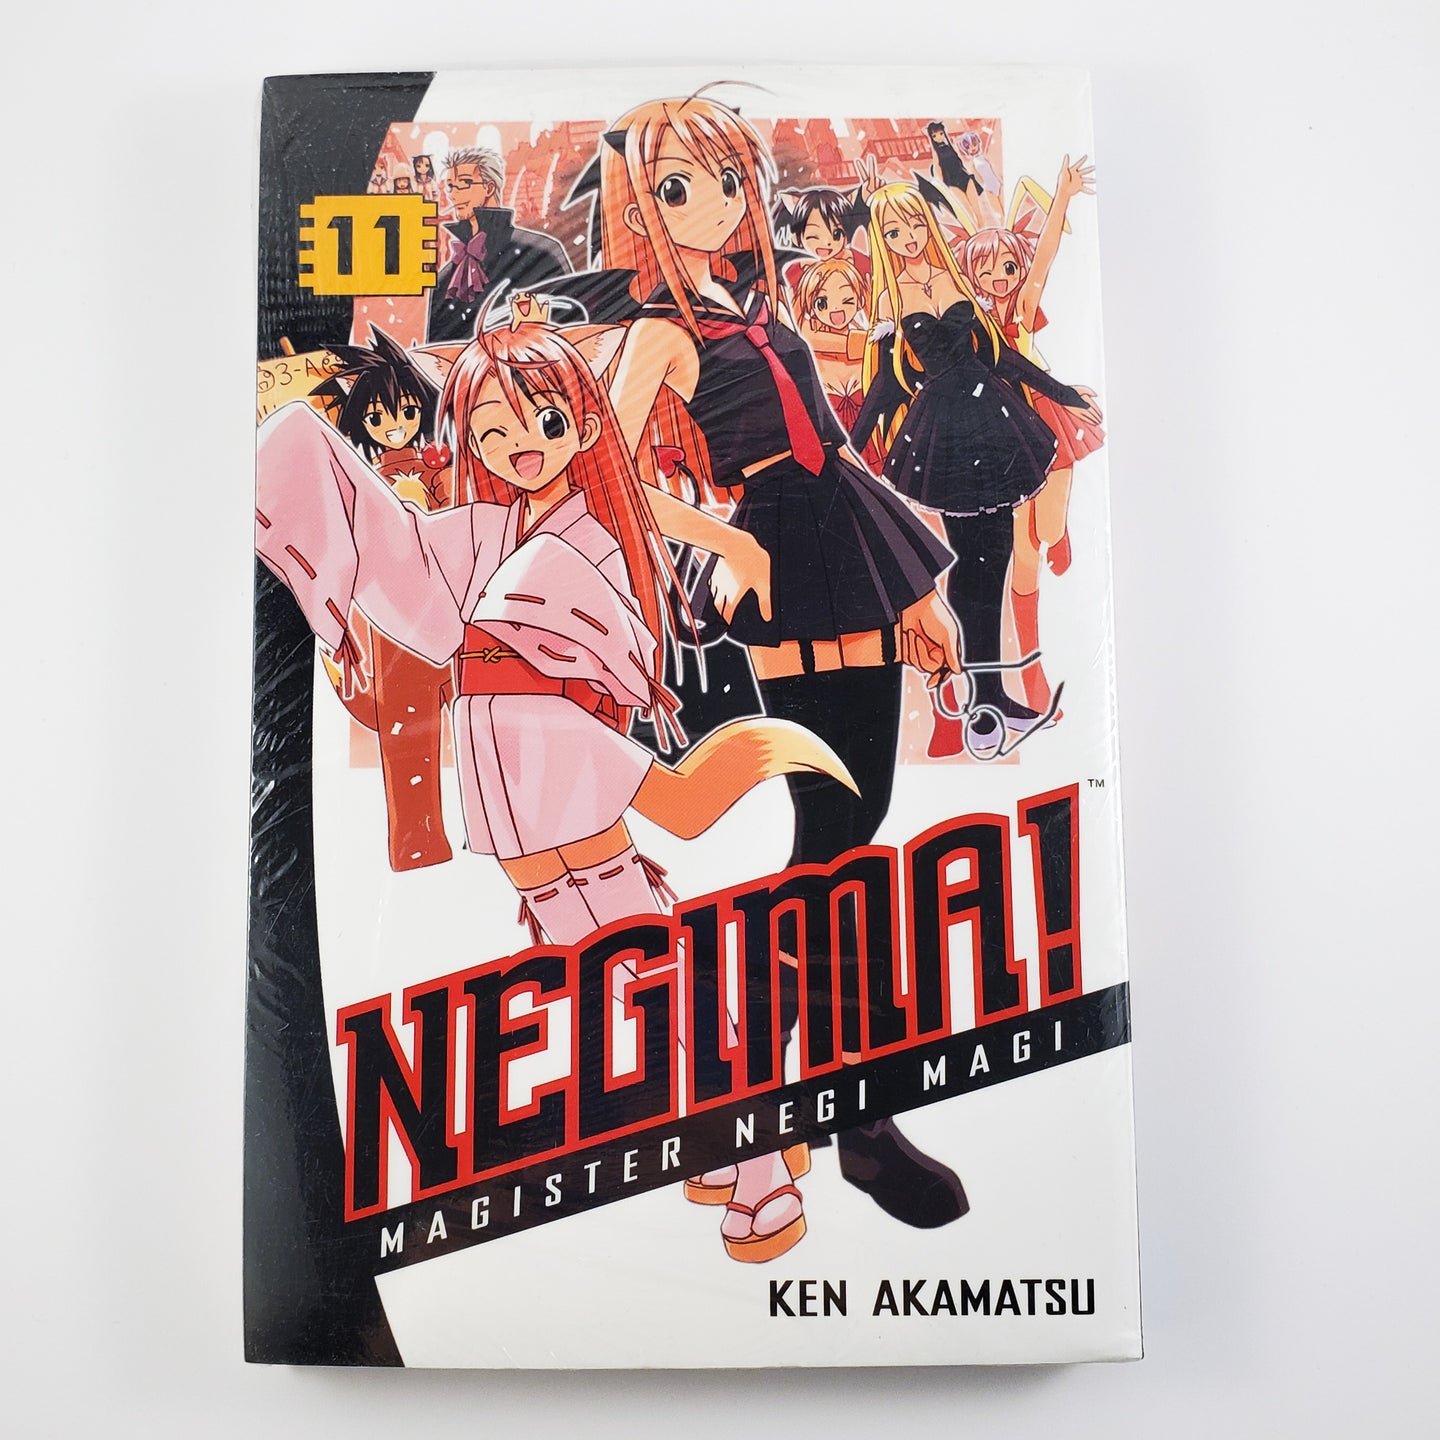 Negima! Volume 11. Manga by Ken Akamatsu